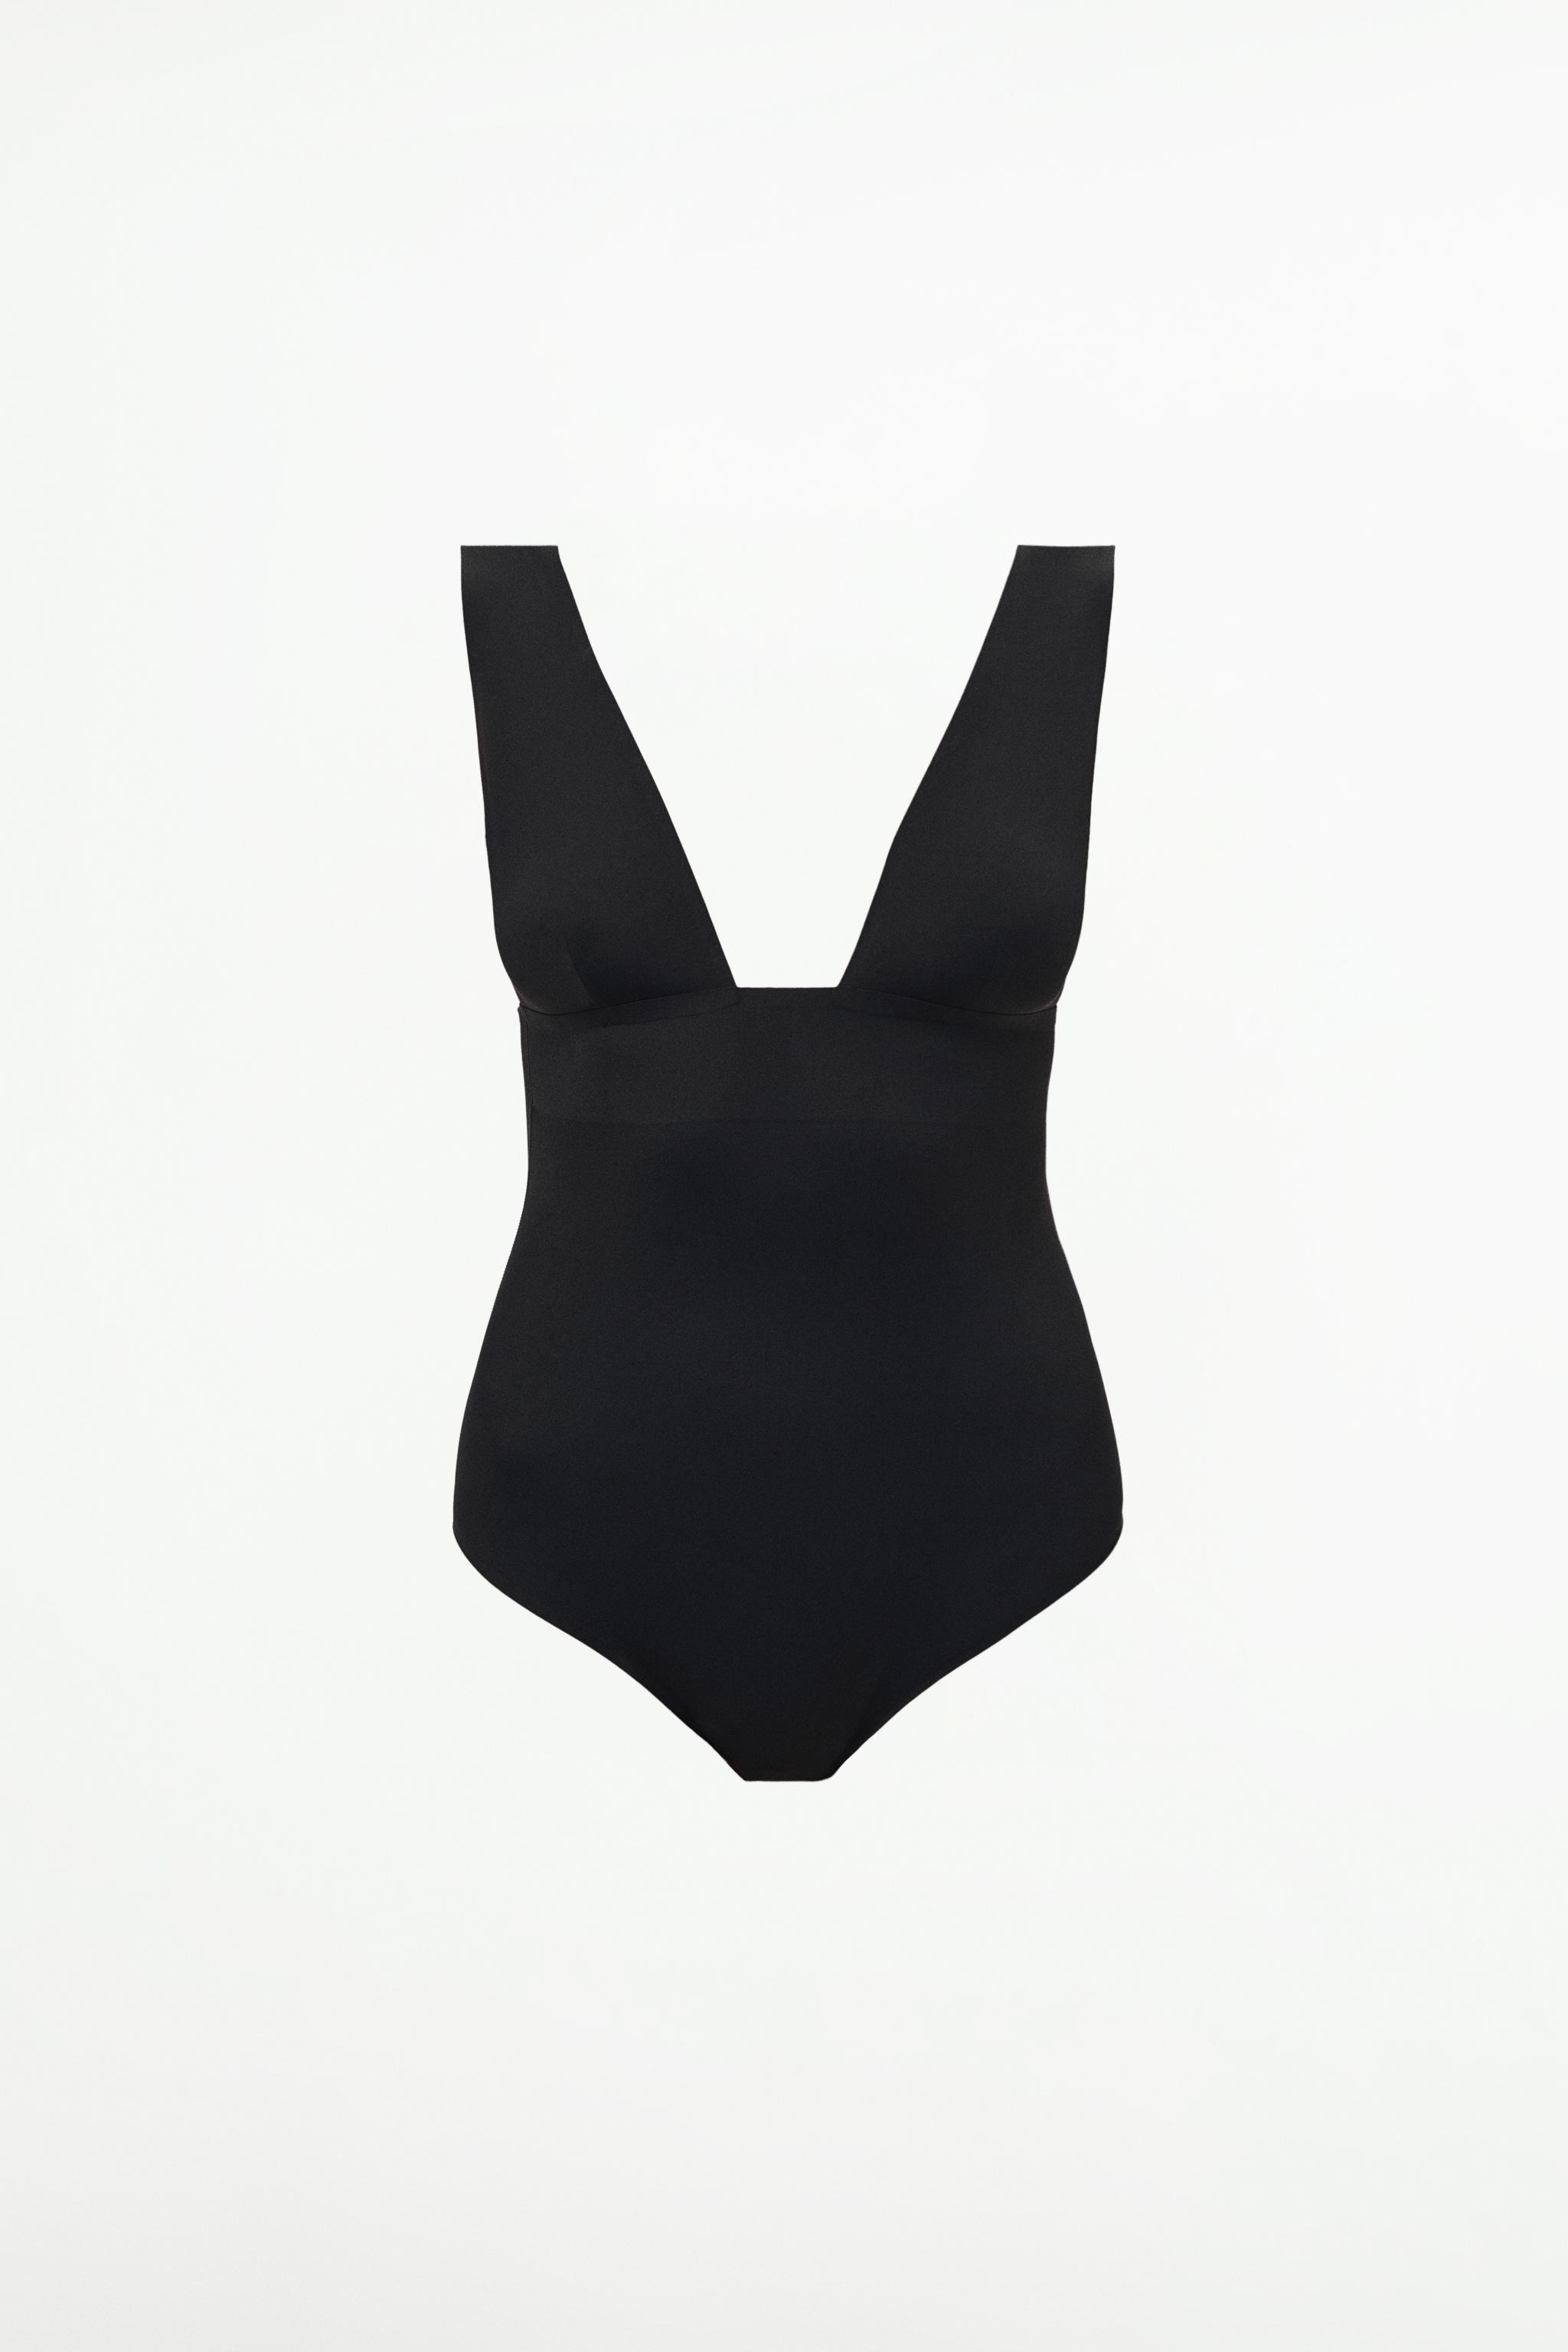 Zara Black Underbust Body Shaper - Shapes By Mena